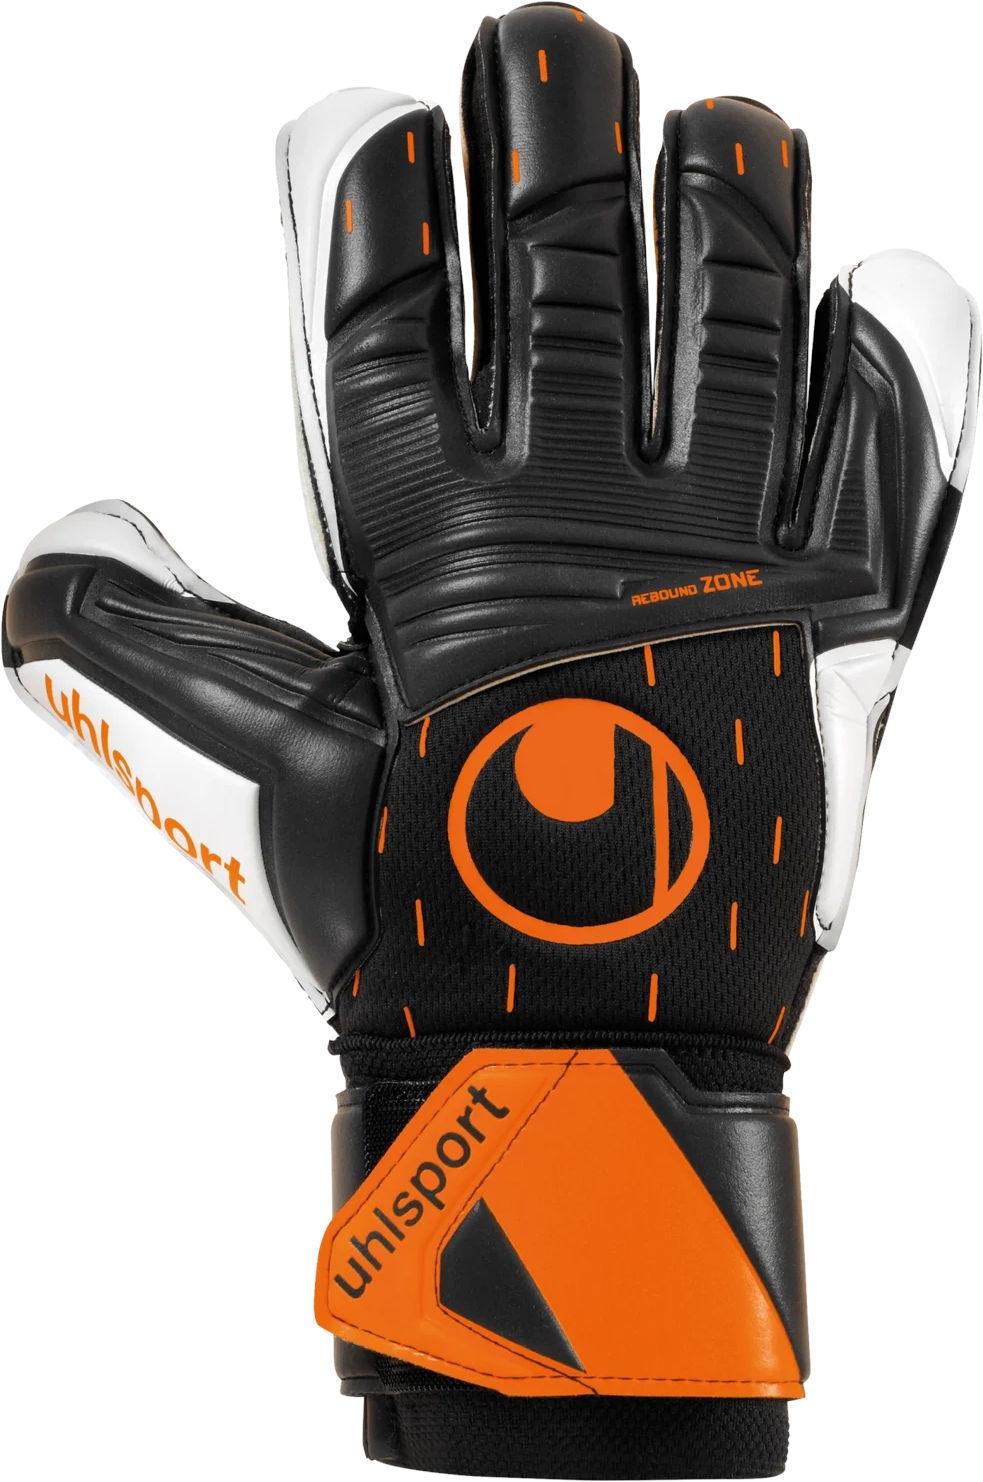 Goalkeeper's Uhlsport Supersoft Speed Contact Goalkeeper Gloves